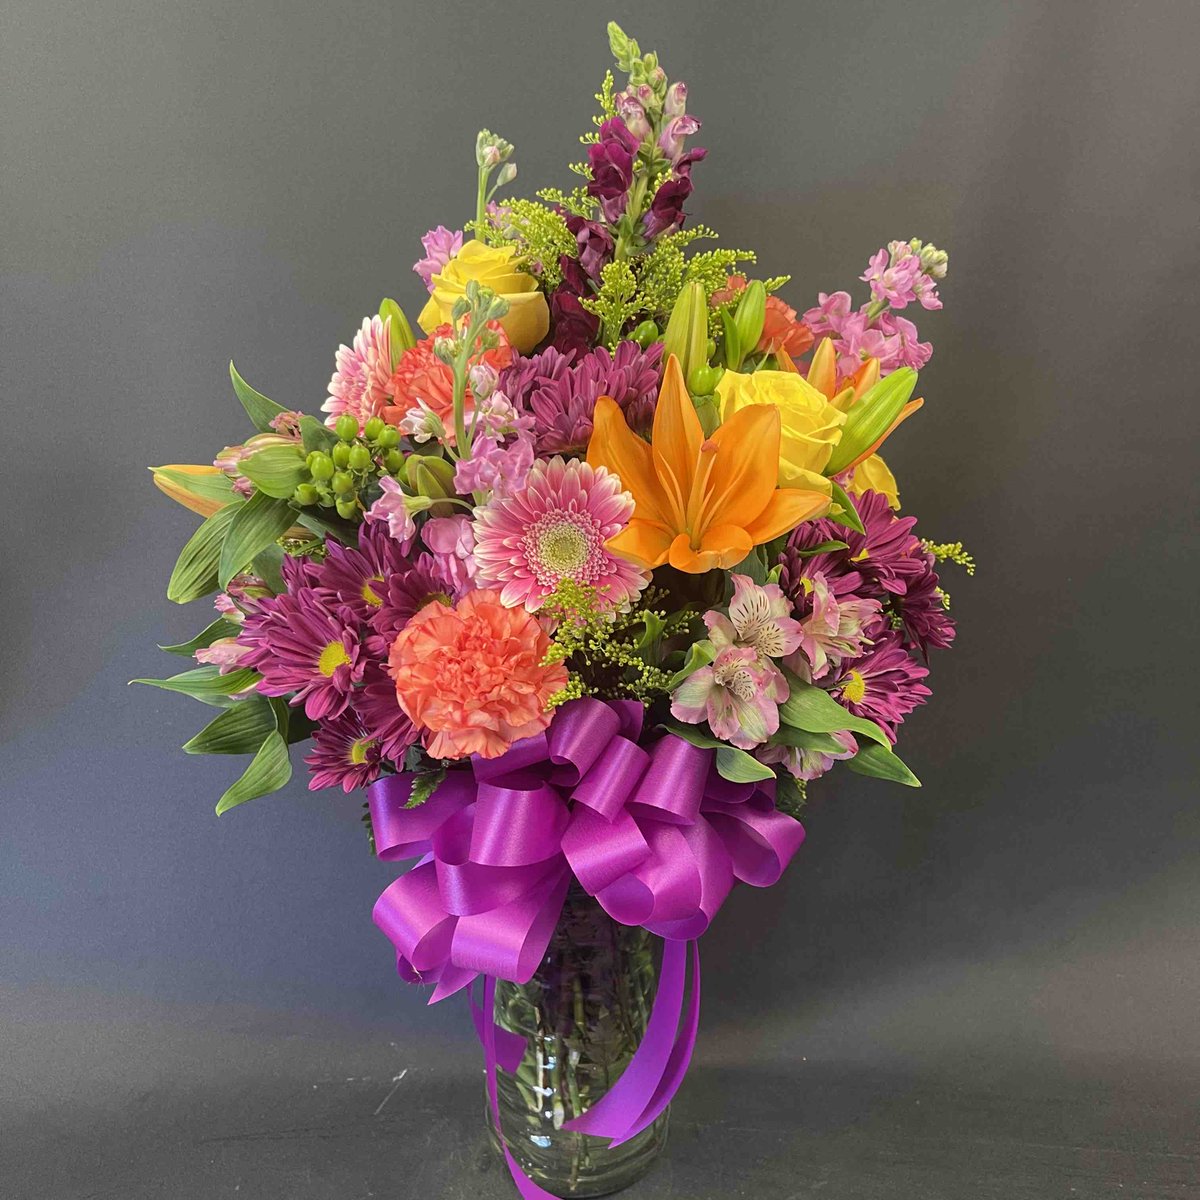 Flowers make the moment... Let us make a moment for you, at Stein Your Florist Co.  steinyourflorist.com
.
.
#steinflorist #steinyourflorist #flowers #florist #flowershop #floristry #shopsmall #shoplocal #smallbusiness #phillyflorist #philadelphiaflorist #NJflorist